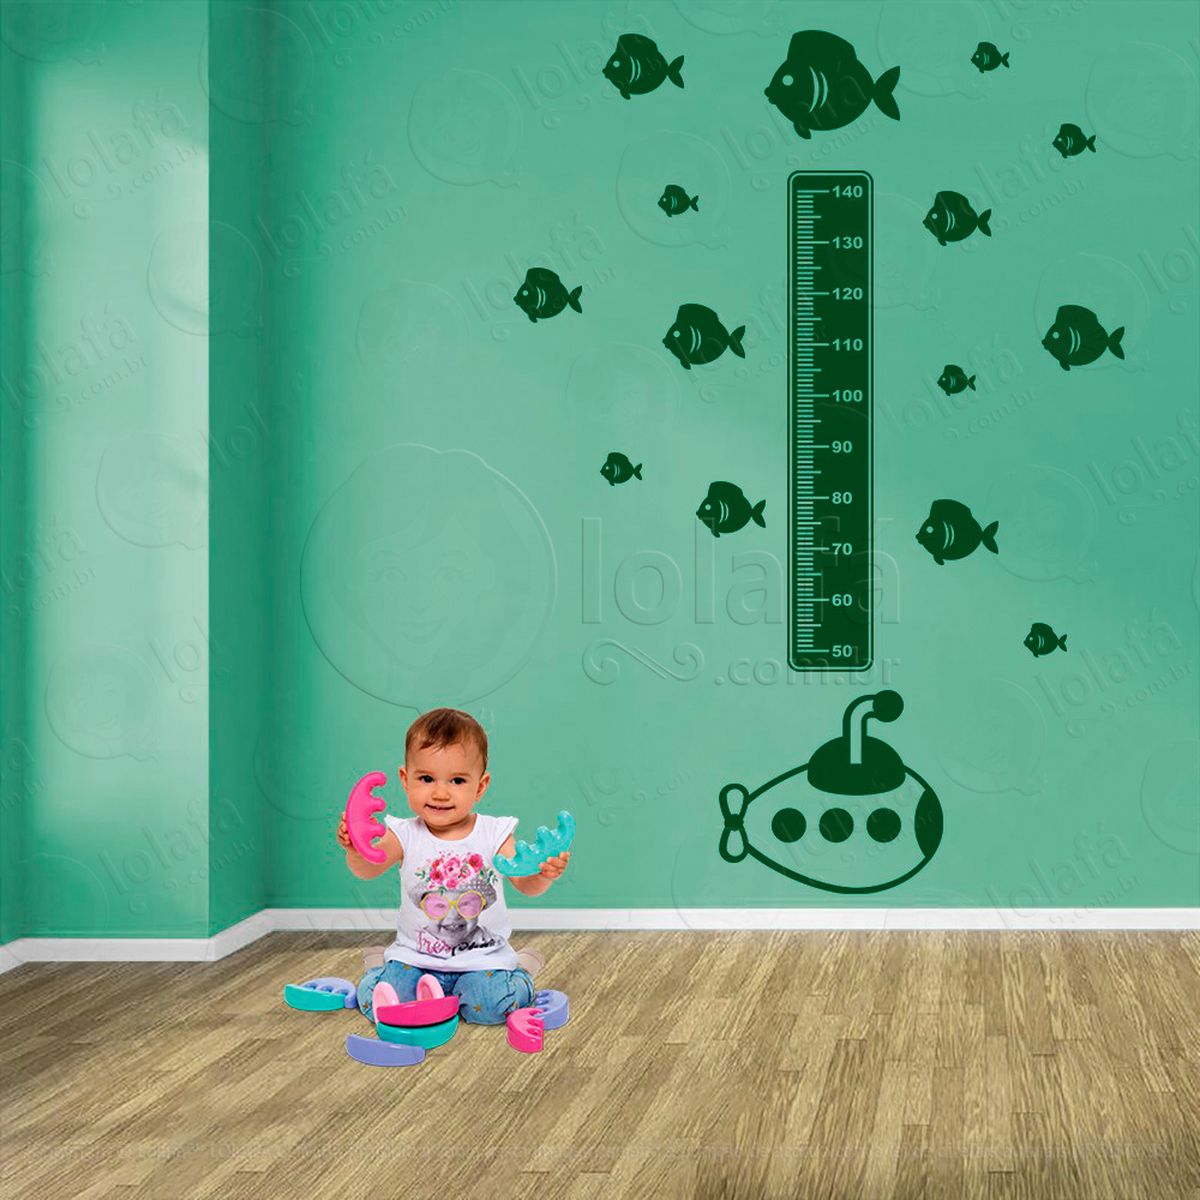 submarino e peixes adesivo régua de crescimento infantil, medidor de altura para quarto, porta e parede - mod:1467